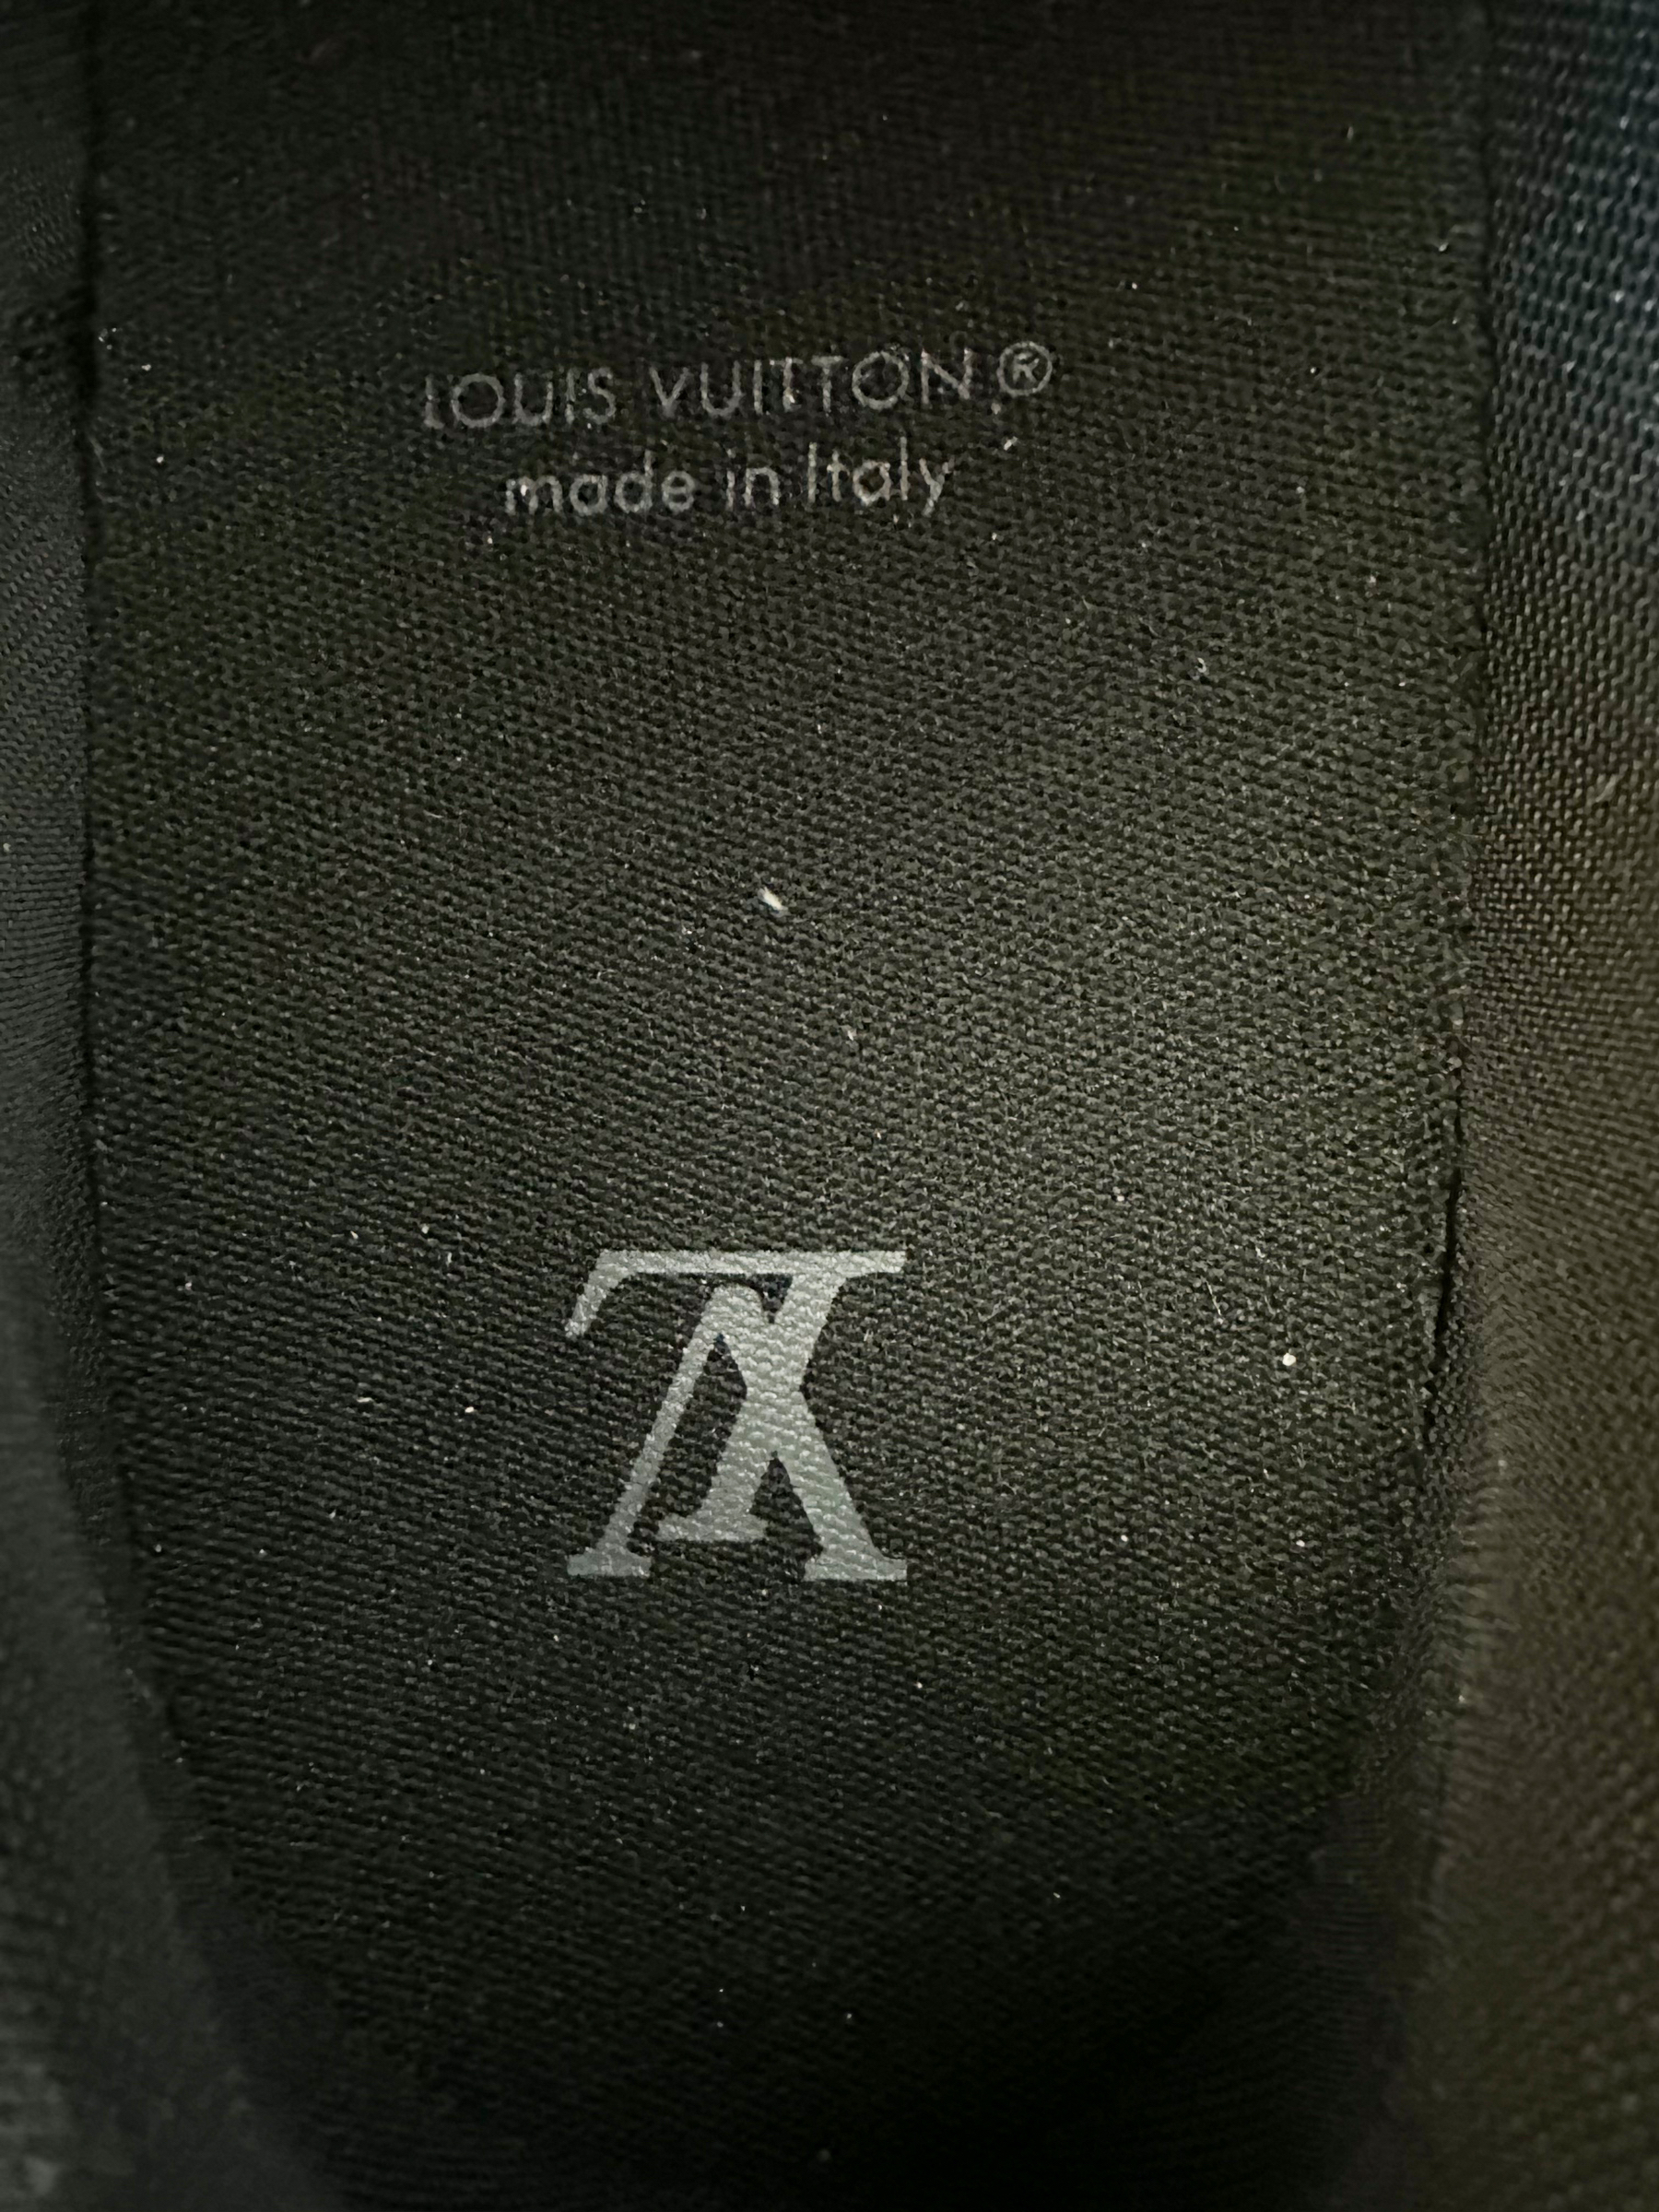 Louis Vuitton Black & Metallic Silver 'Millenium' Sneakers